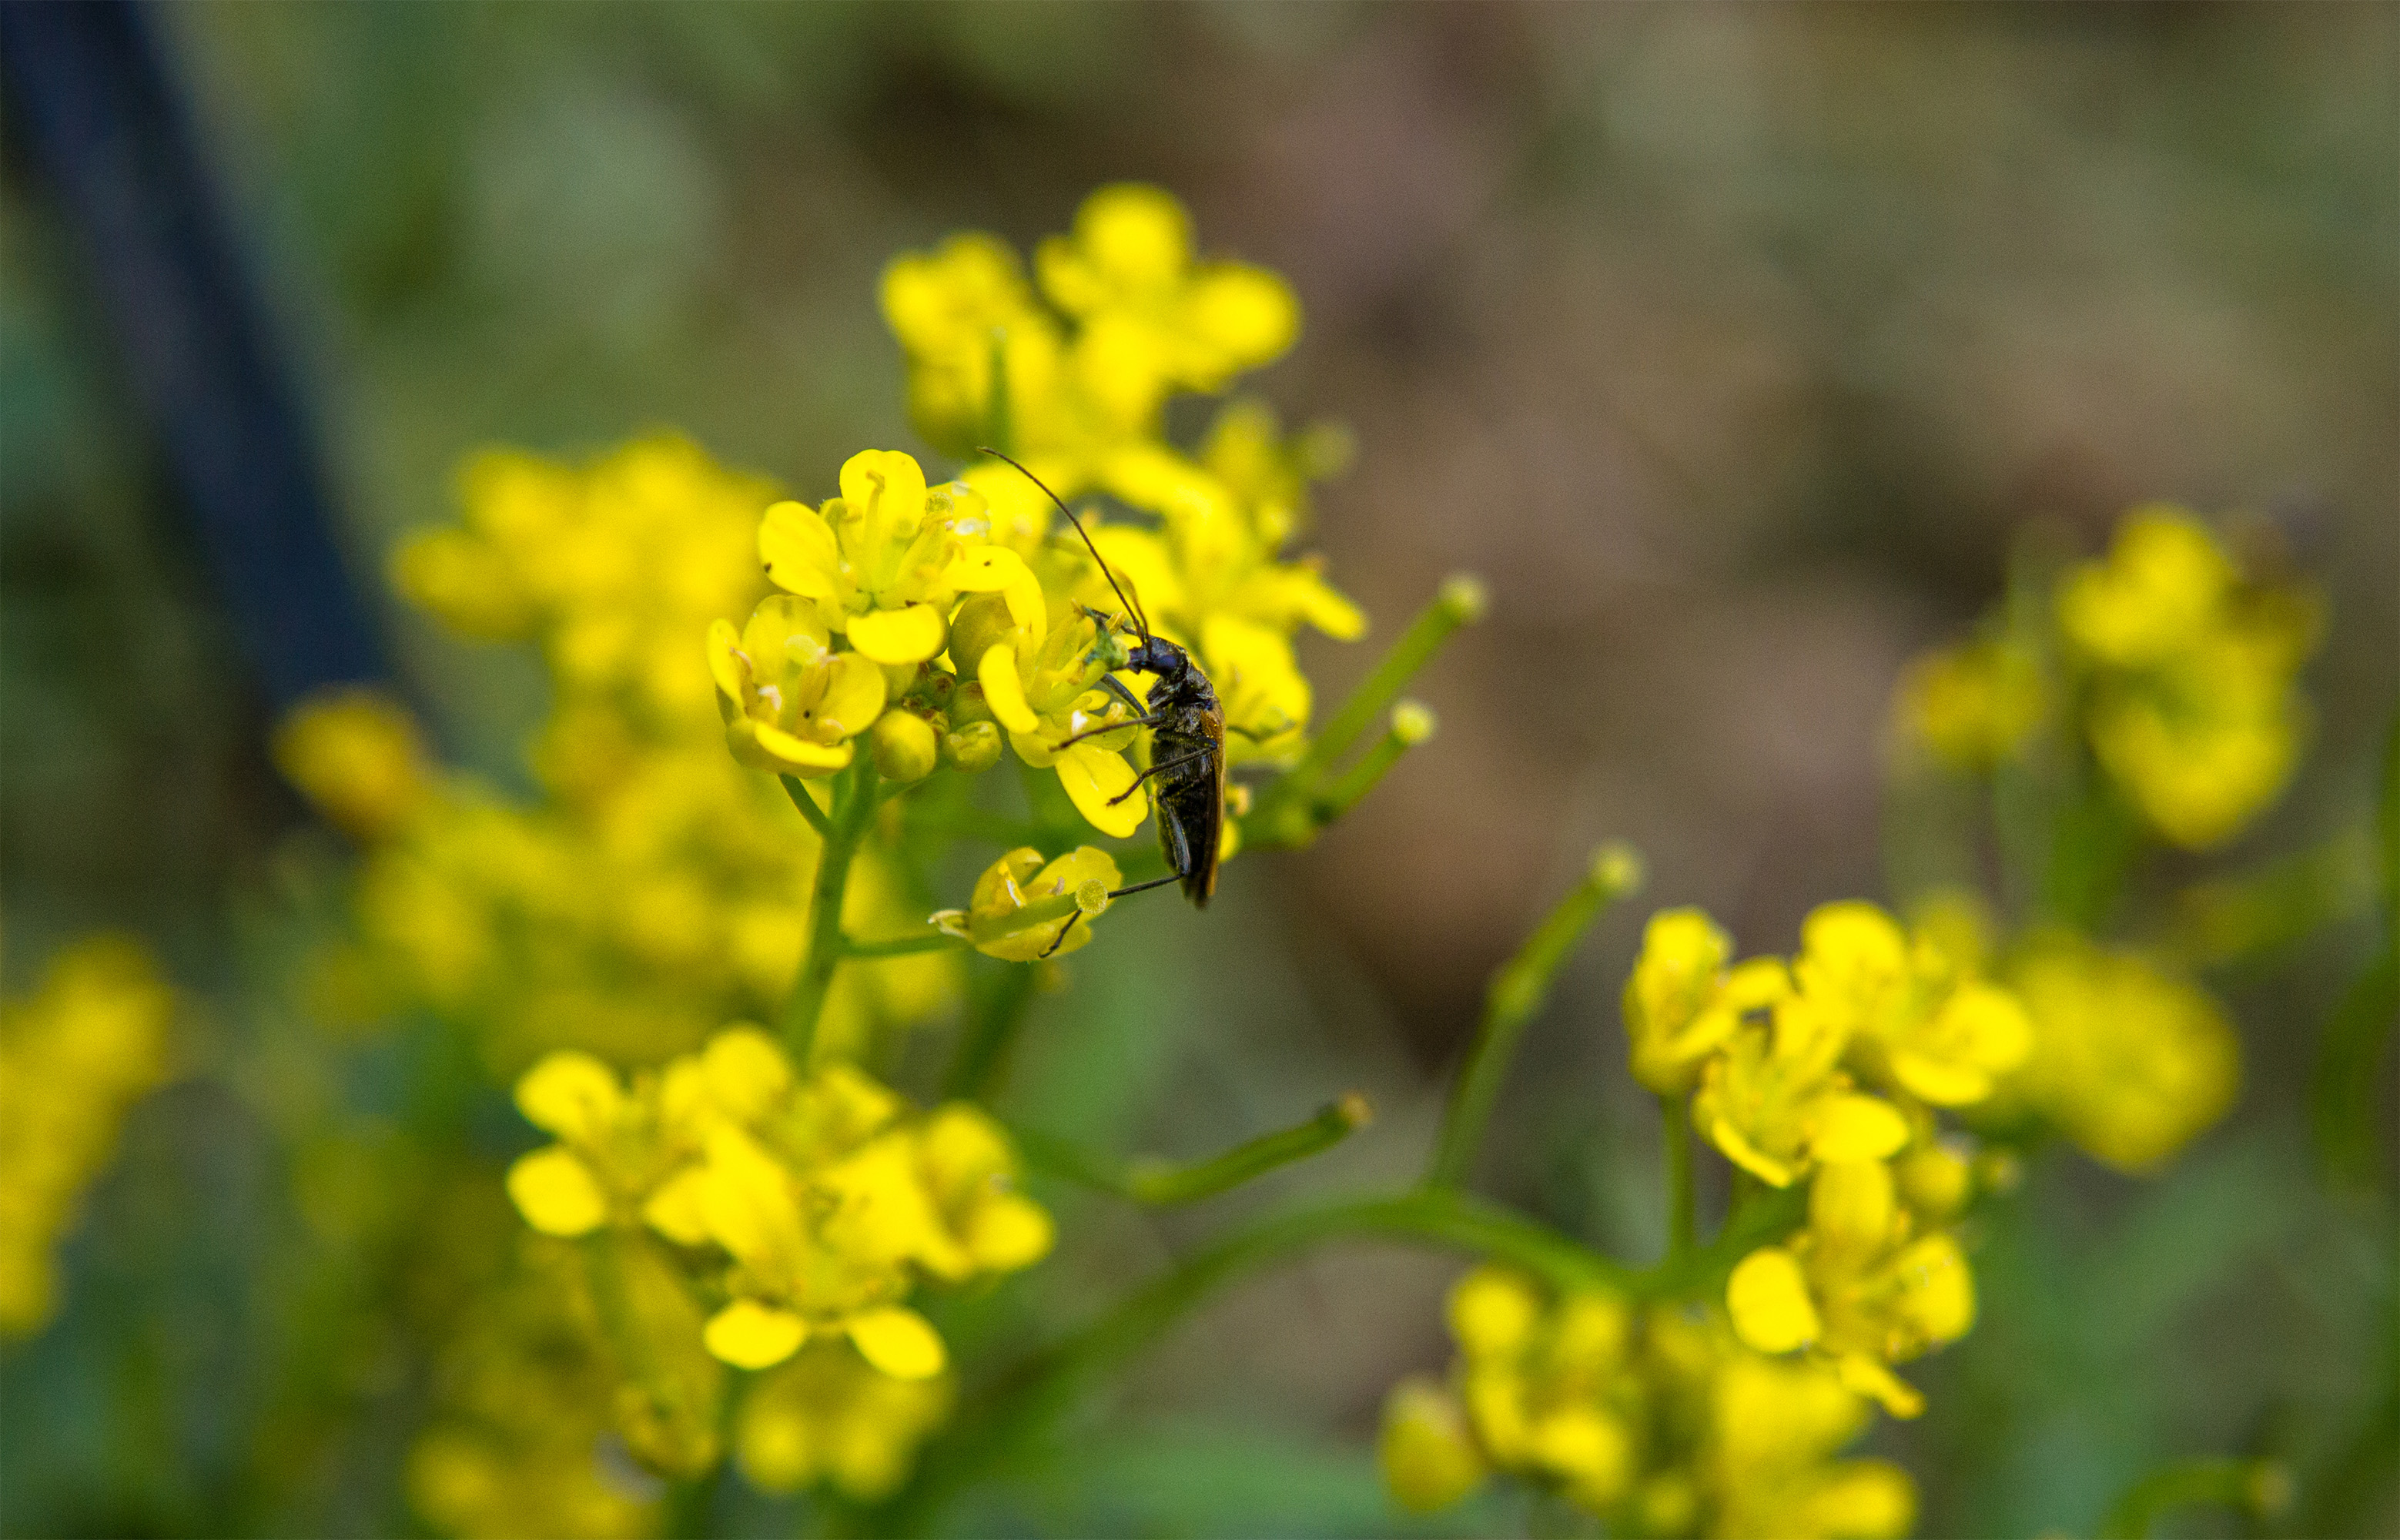 Bug on a flower photo